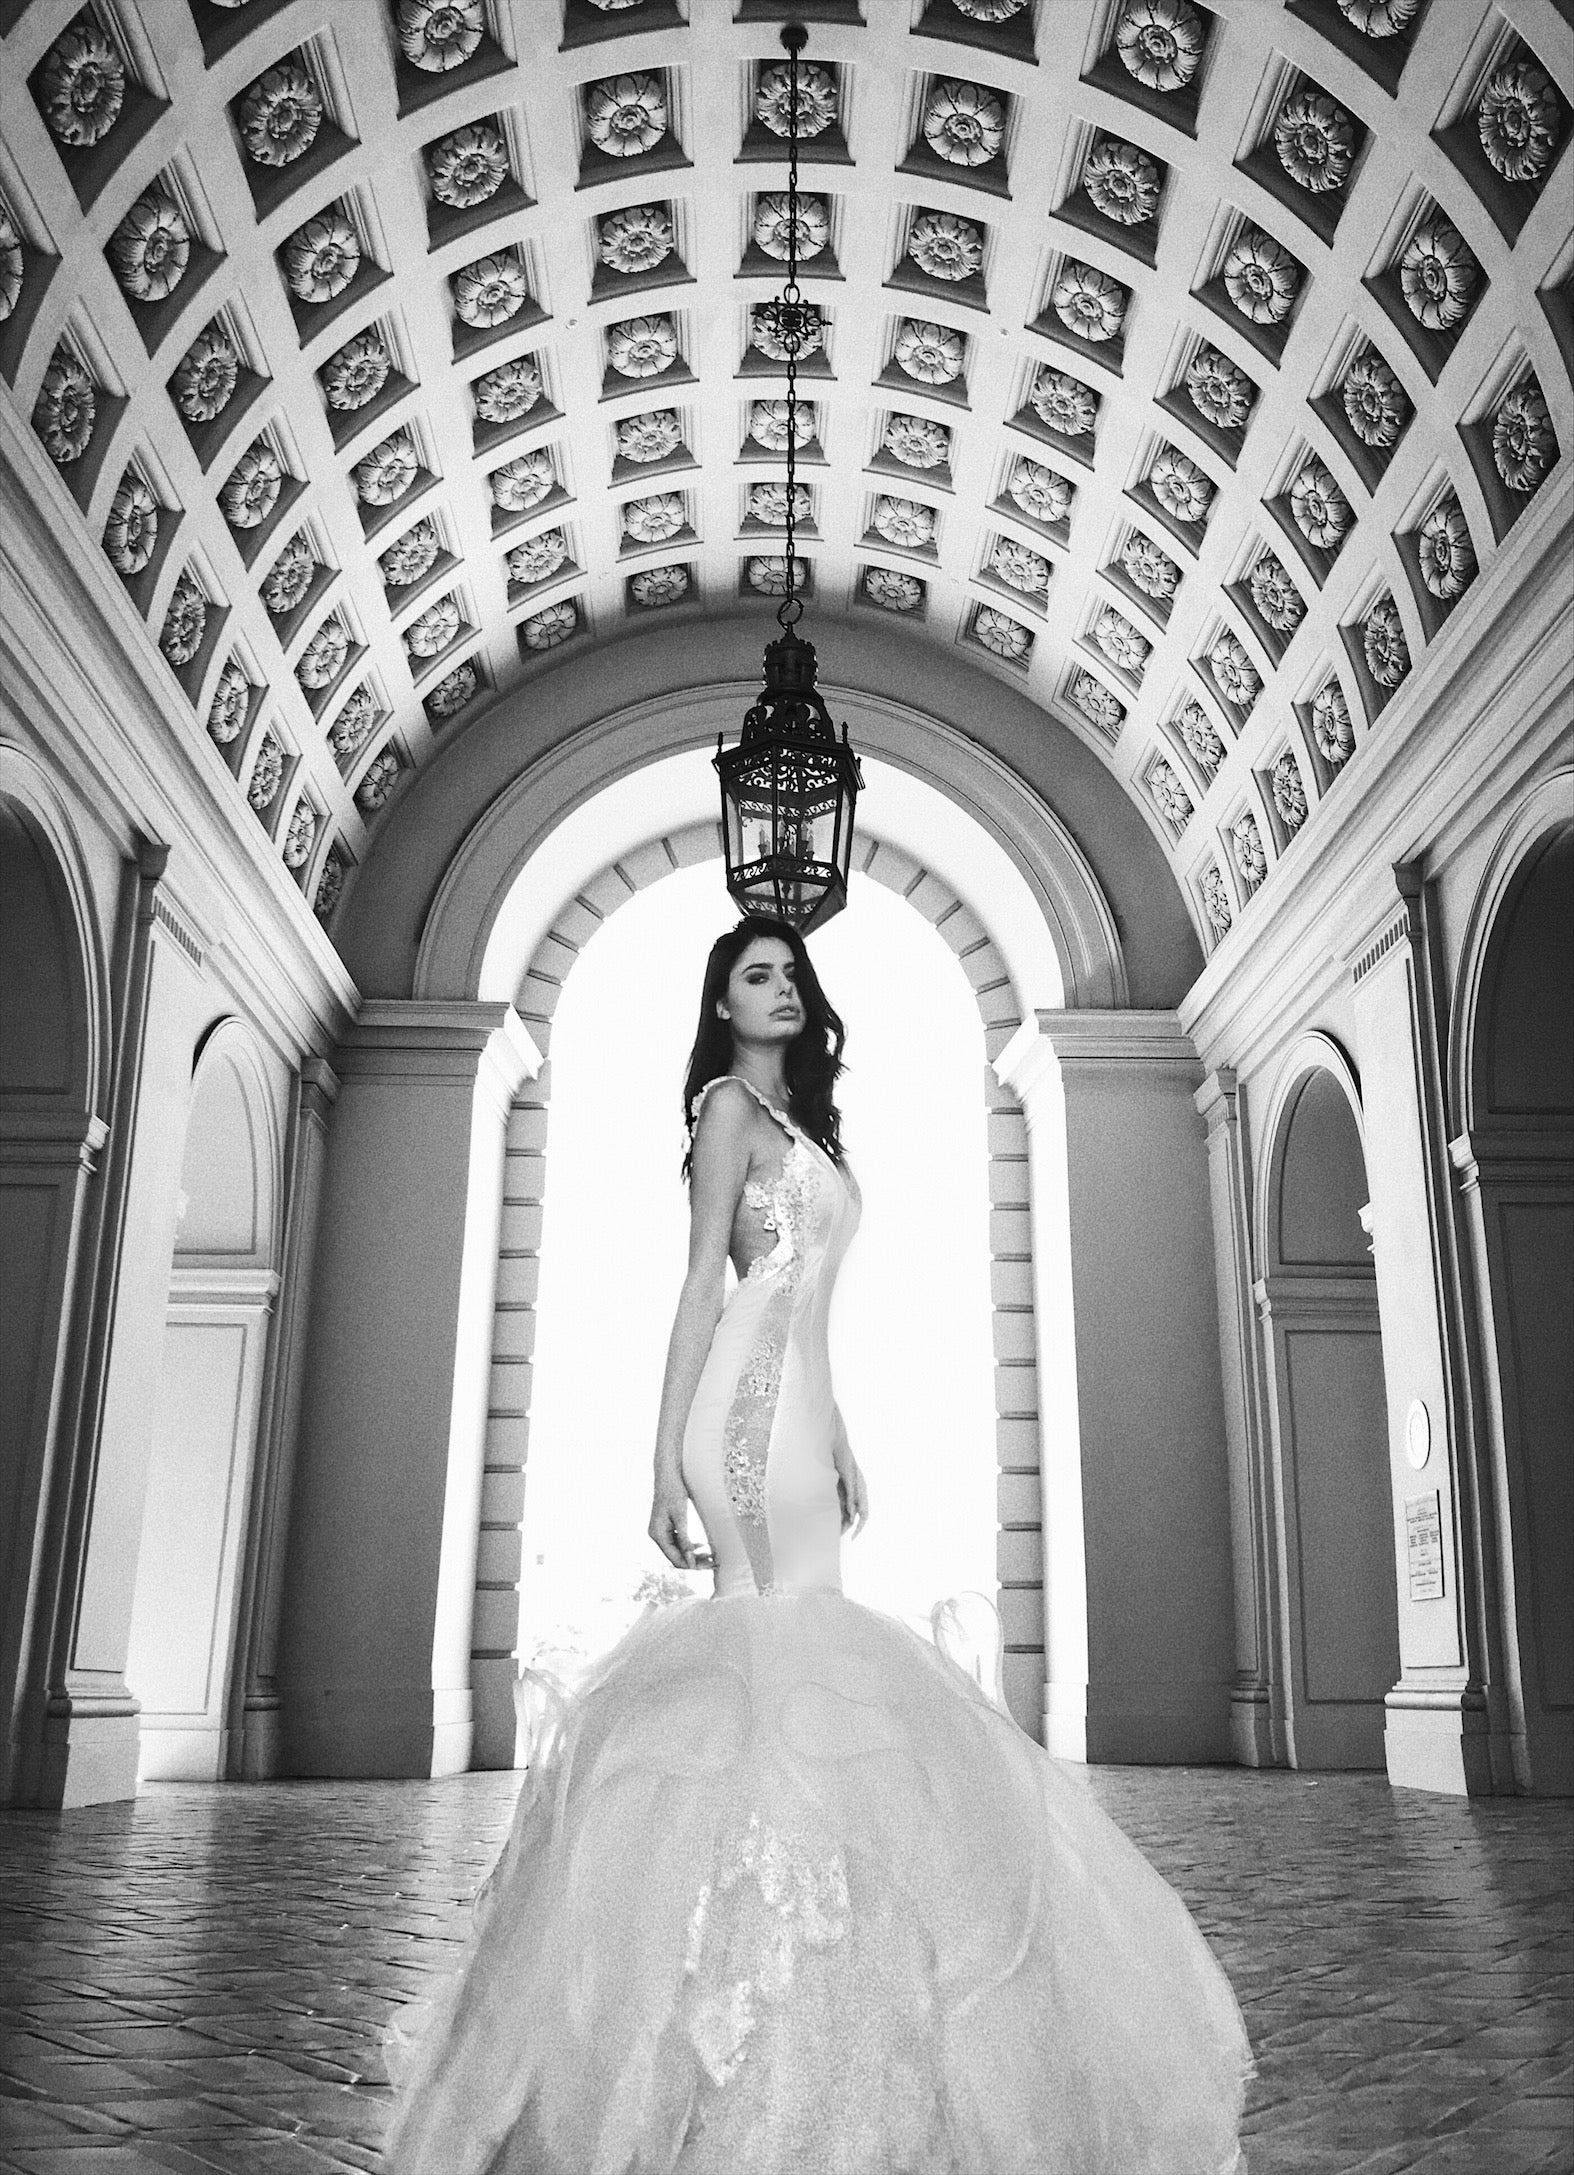 Lauren Elaine "Euphoria" mermaid wedding gown with detachable cathedral train